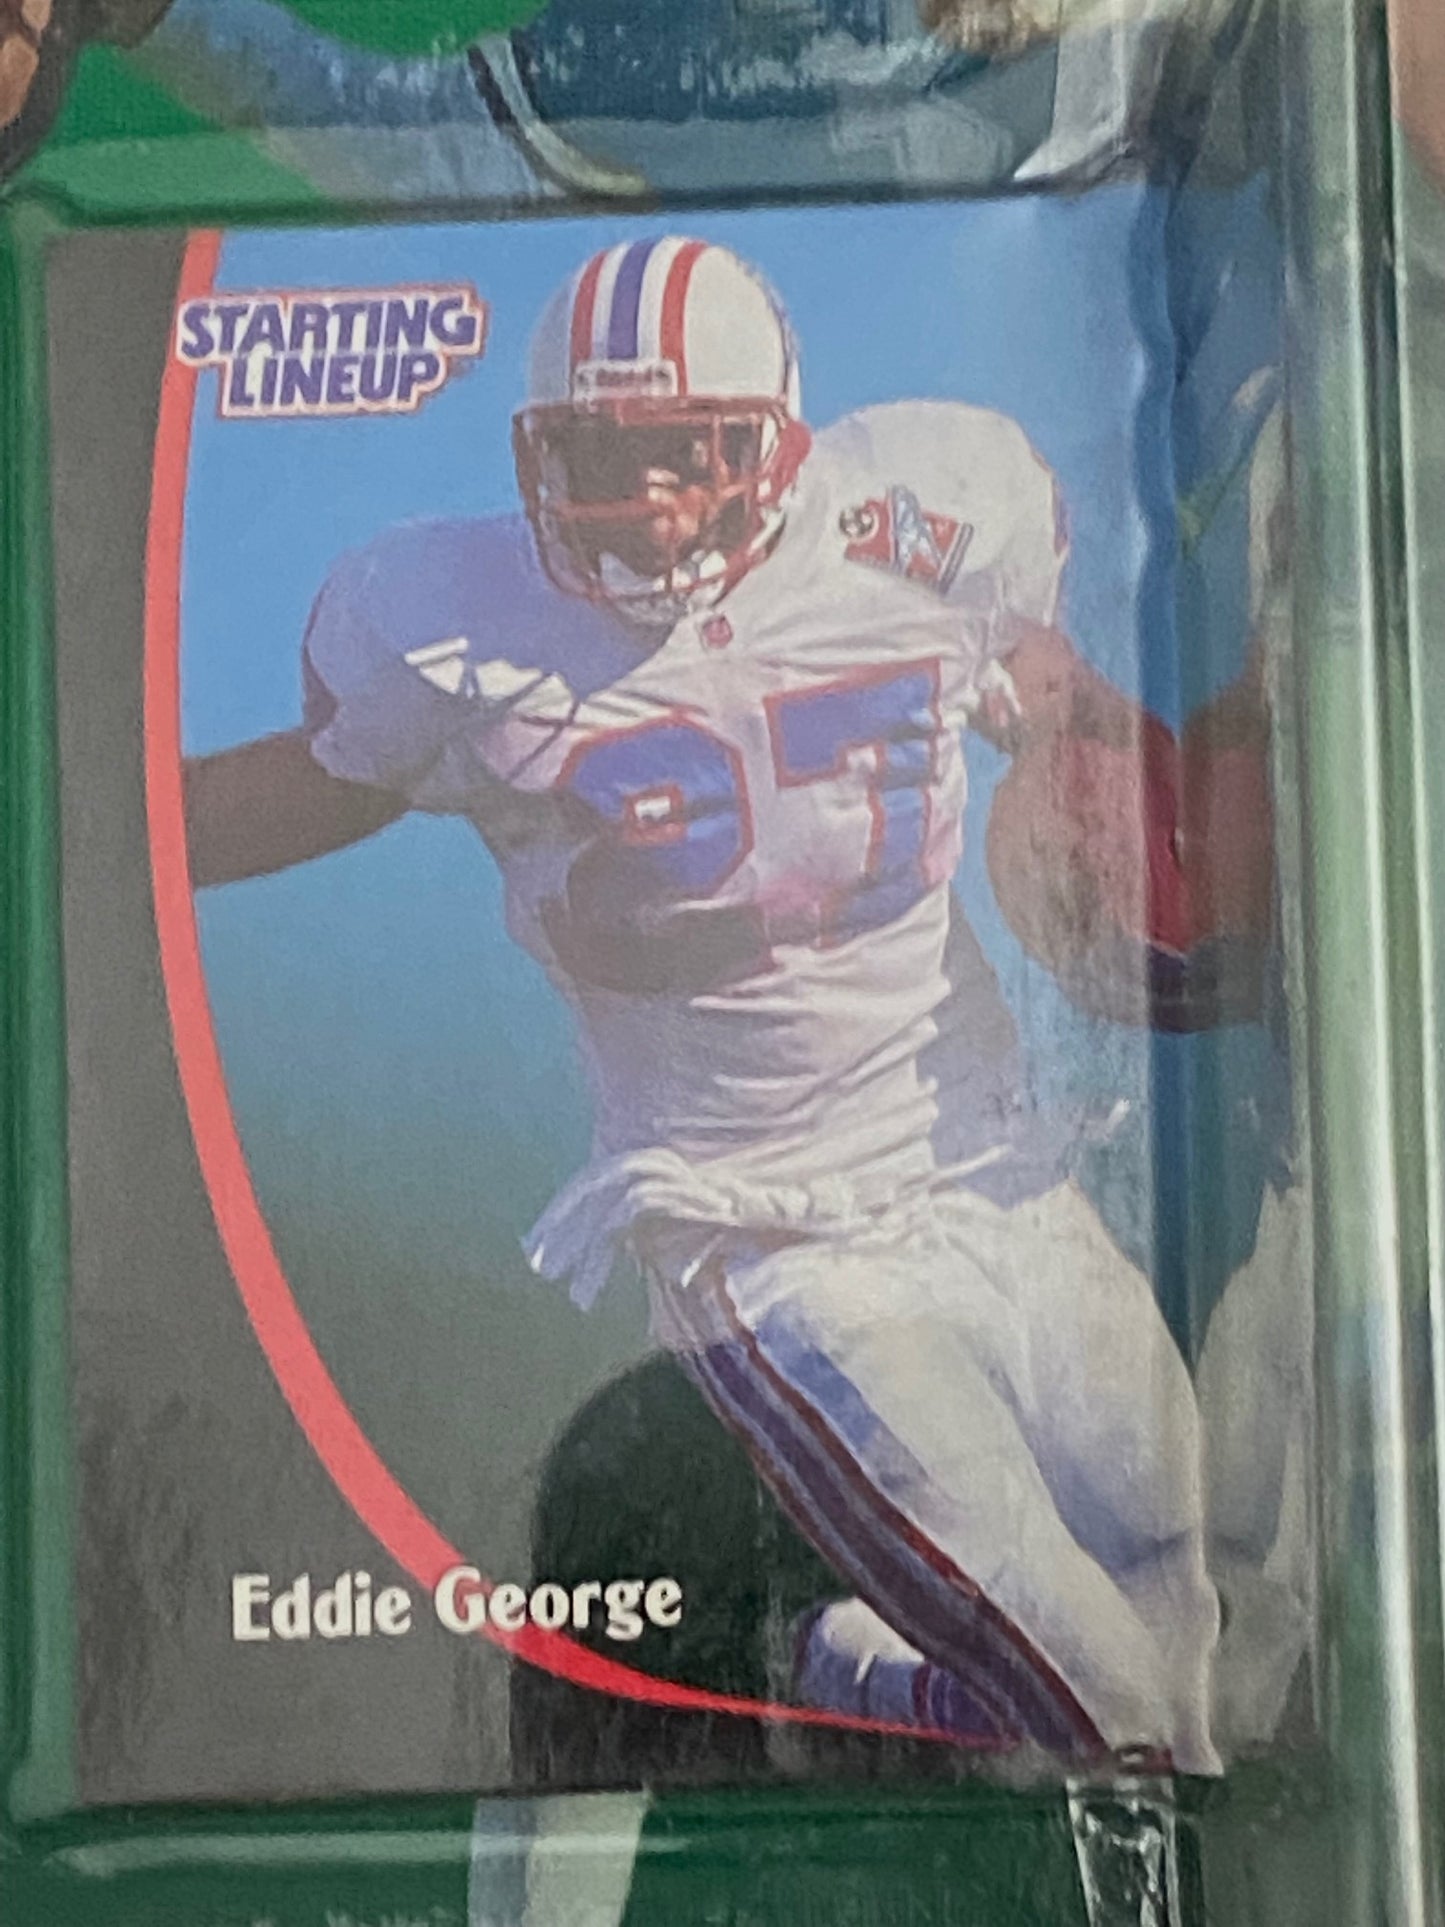 Eddie George 1998 Tennessee Oilers NFL Starting Lineup Figurine NOS by Kenner